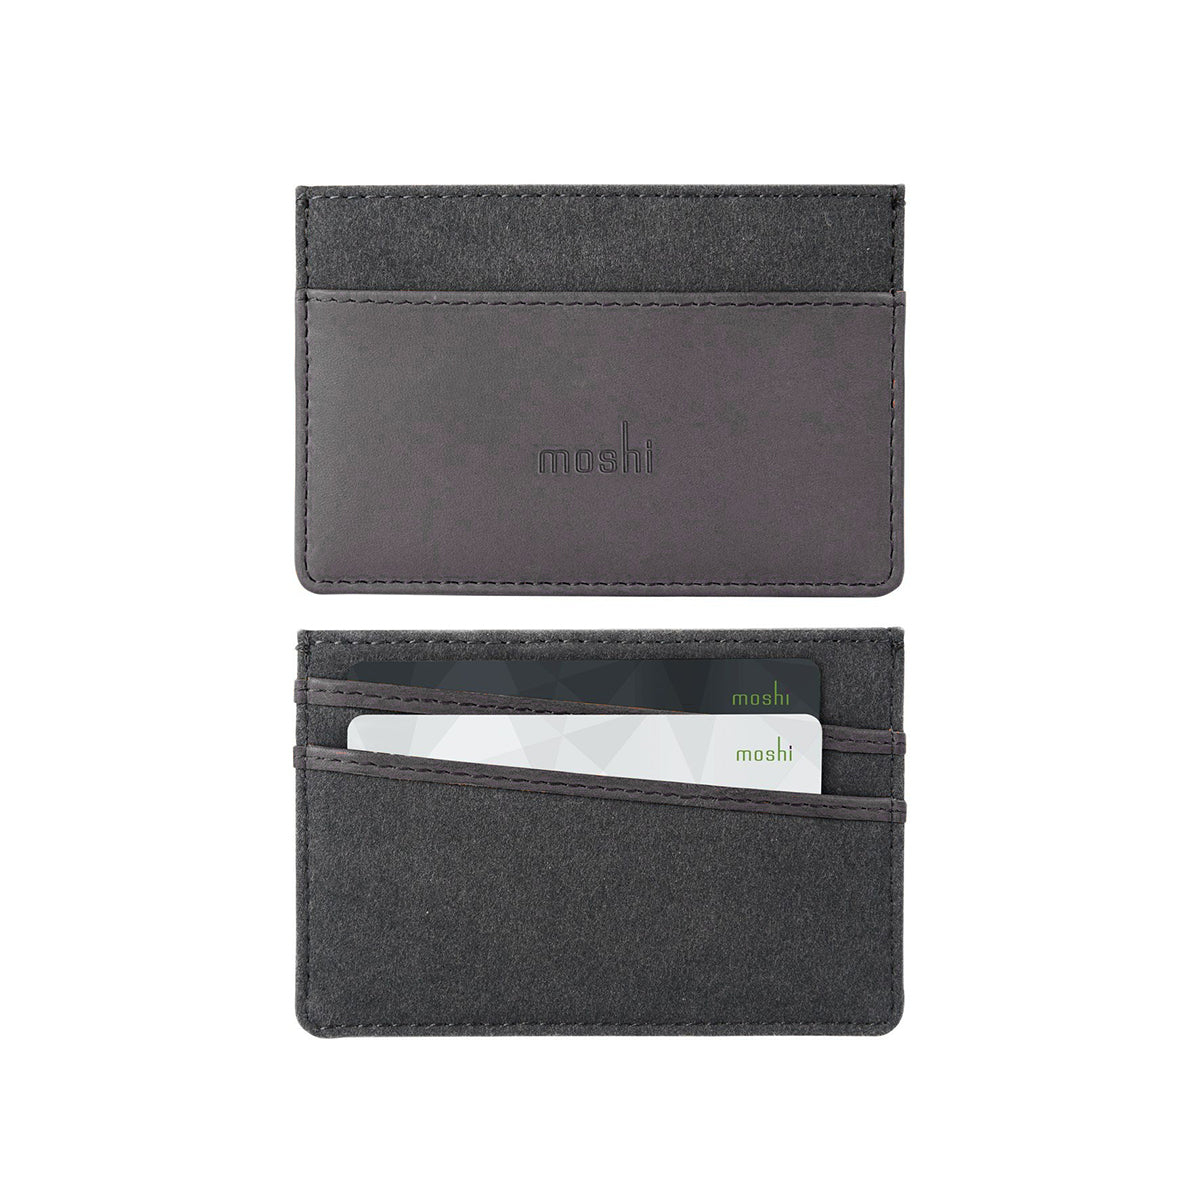 Moshi Card Holder, Black